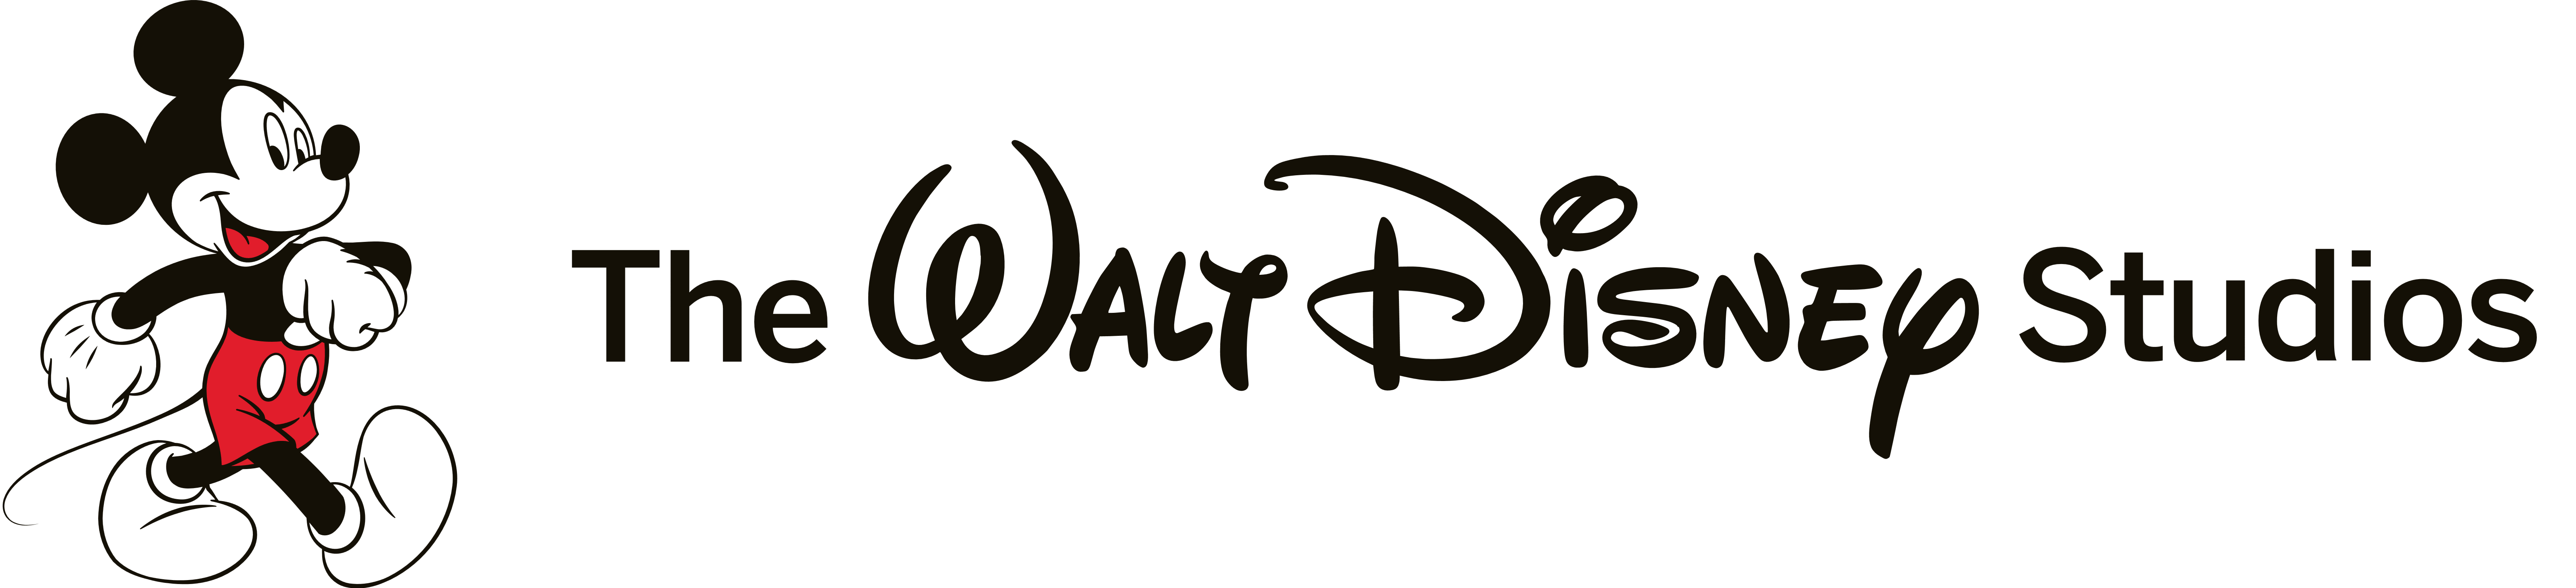 The Walt Disney Studios Logo - Walt Disney Pictures Png Logo - Free Transparent PNG Logos